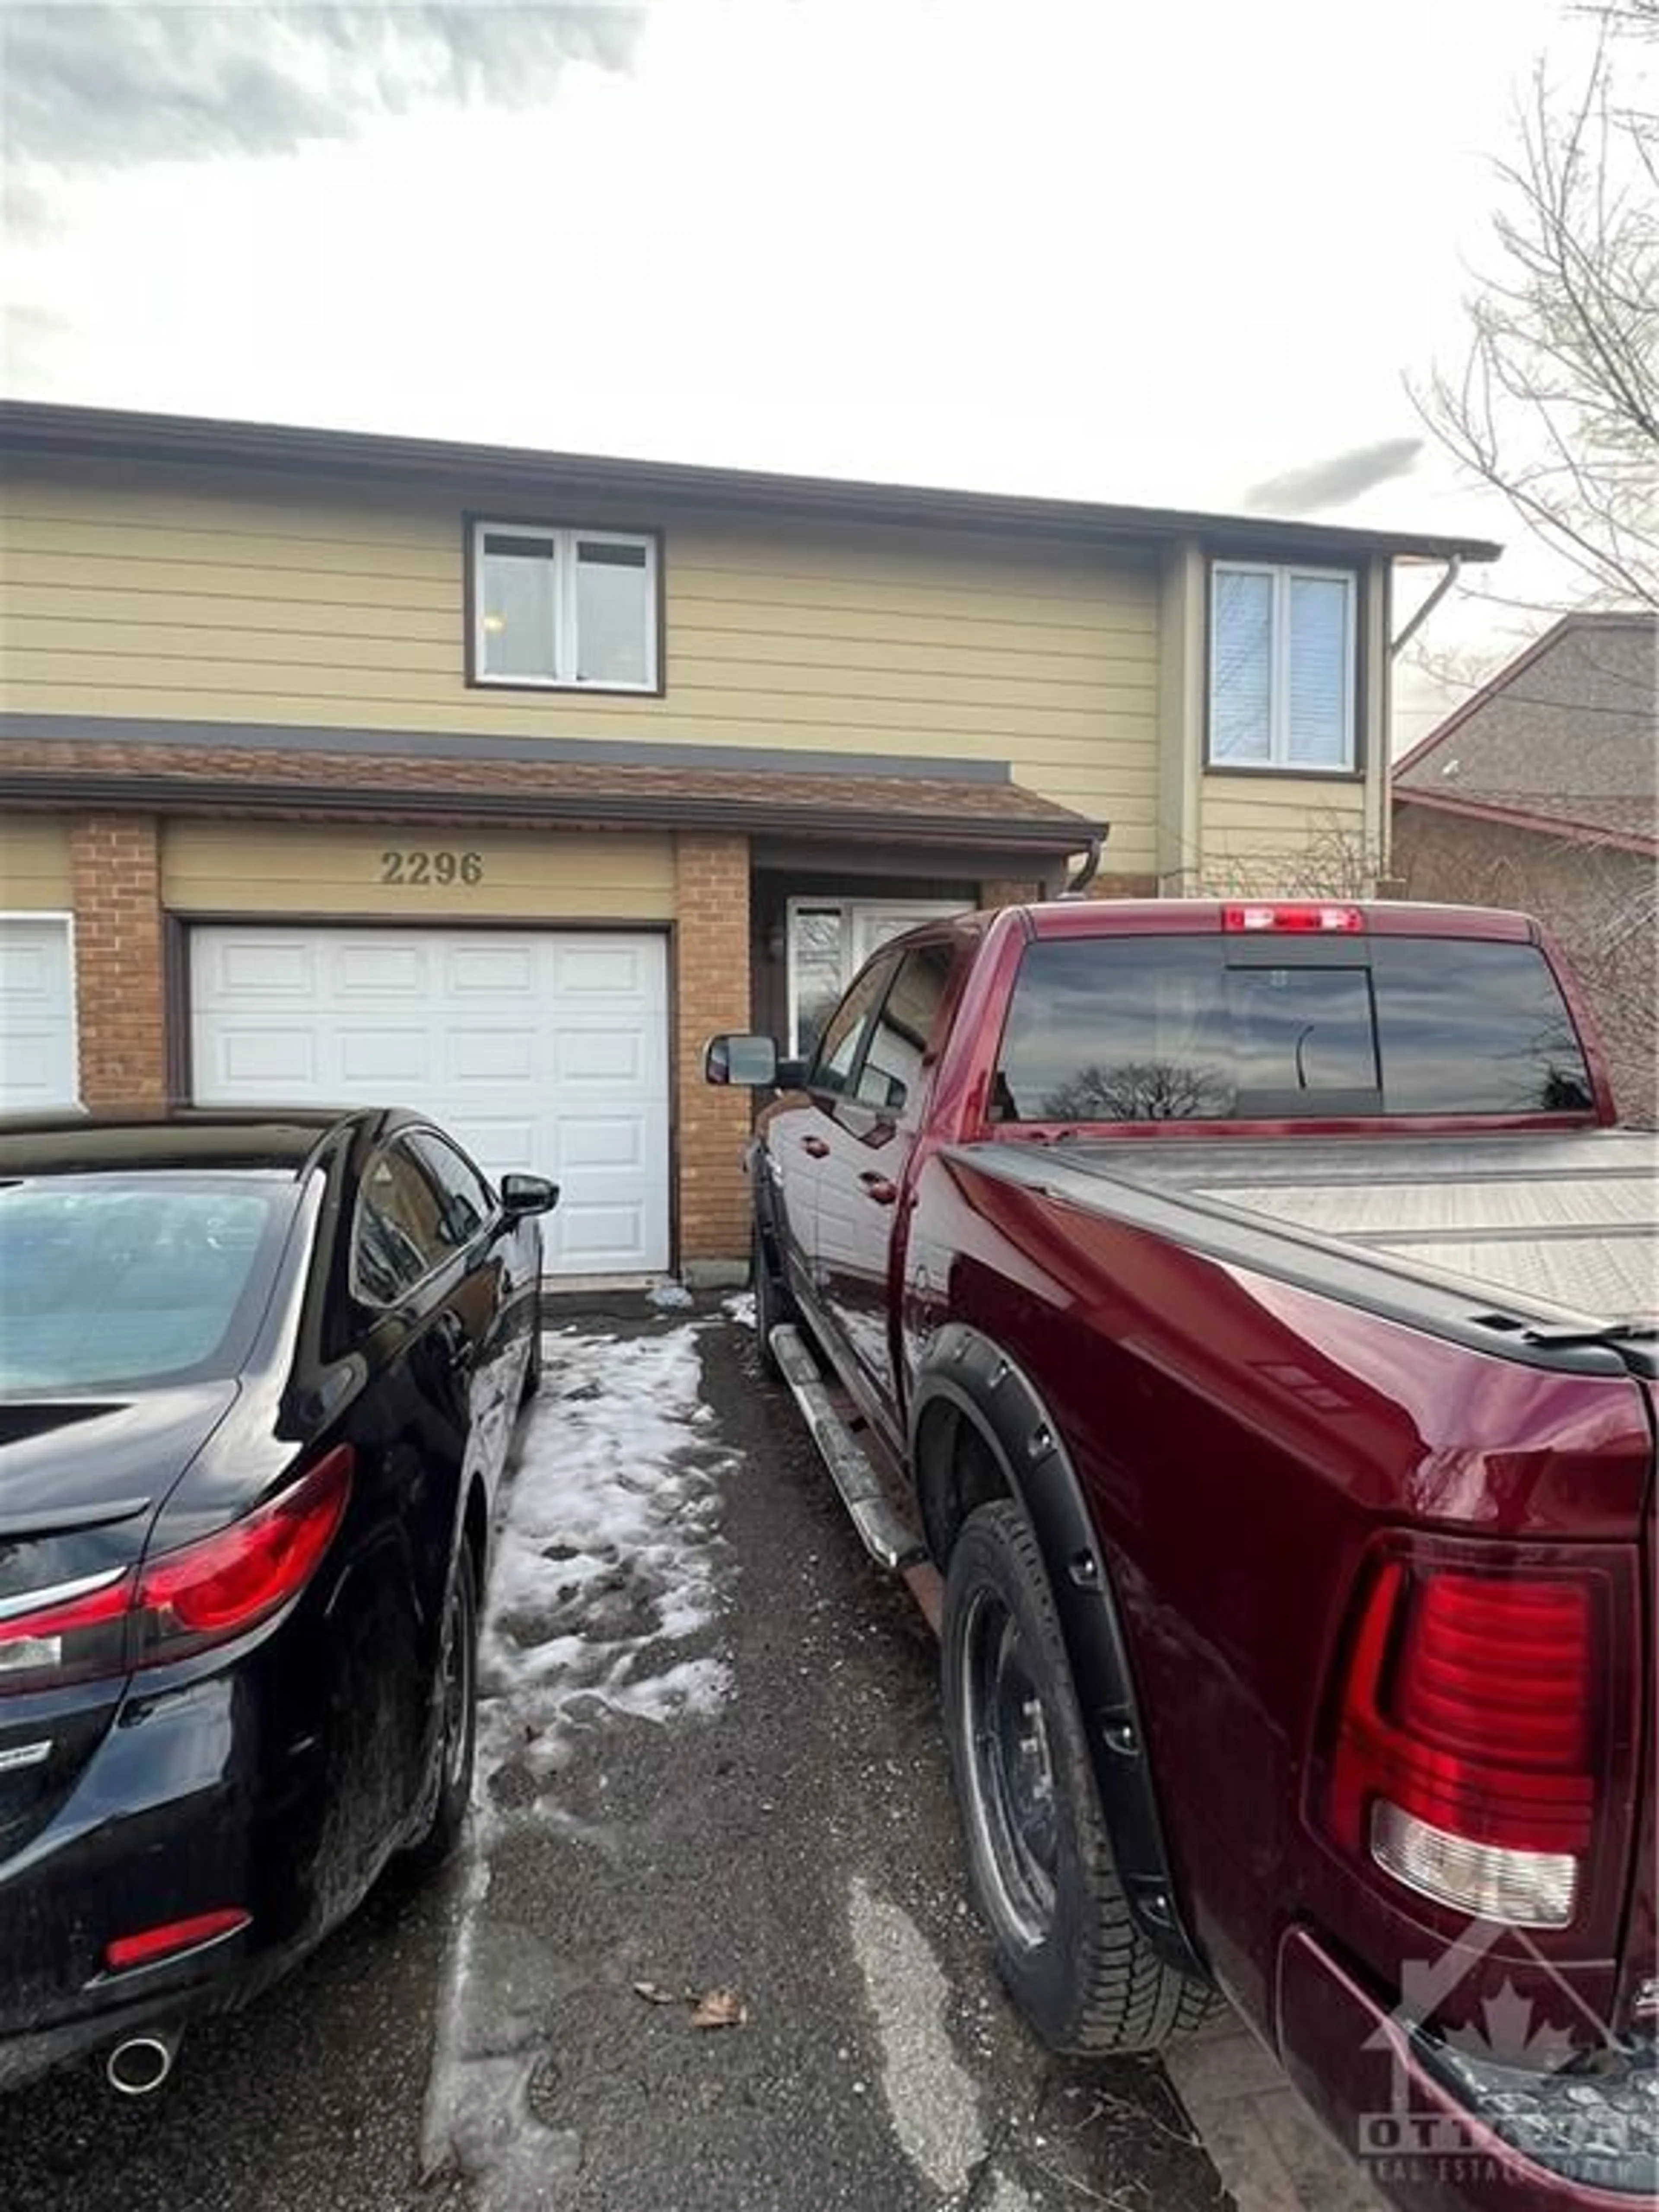 Frontside or backside of a home for 2296 COTTERS Cres, Ottawa Ontario K1V 8Y6